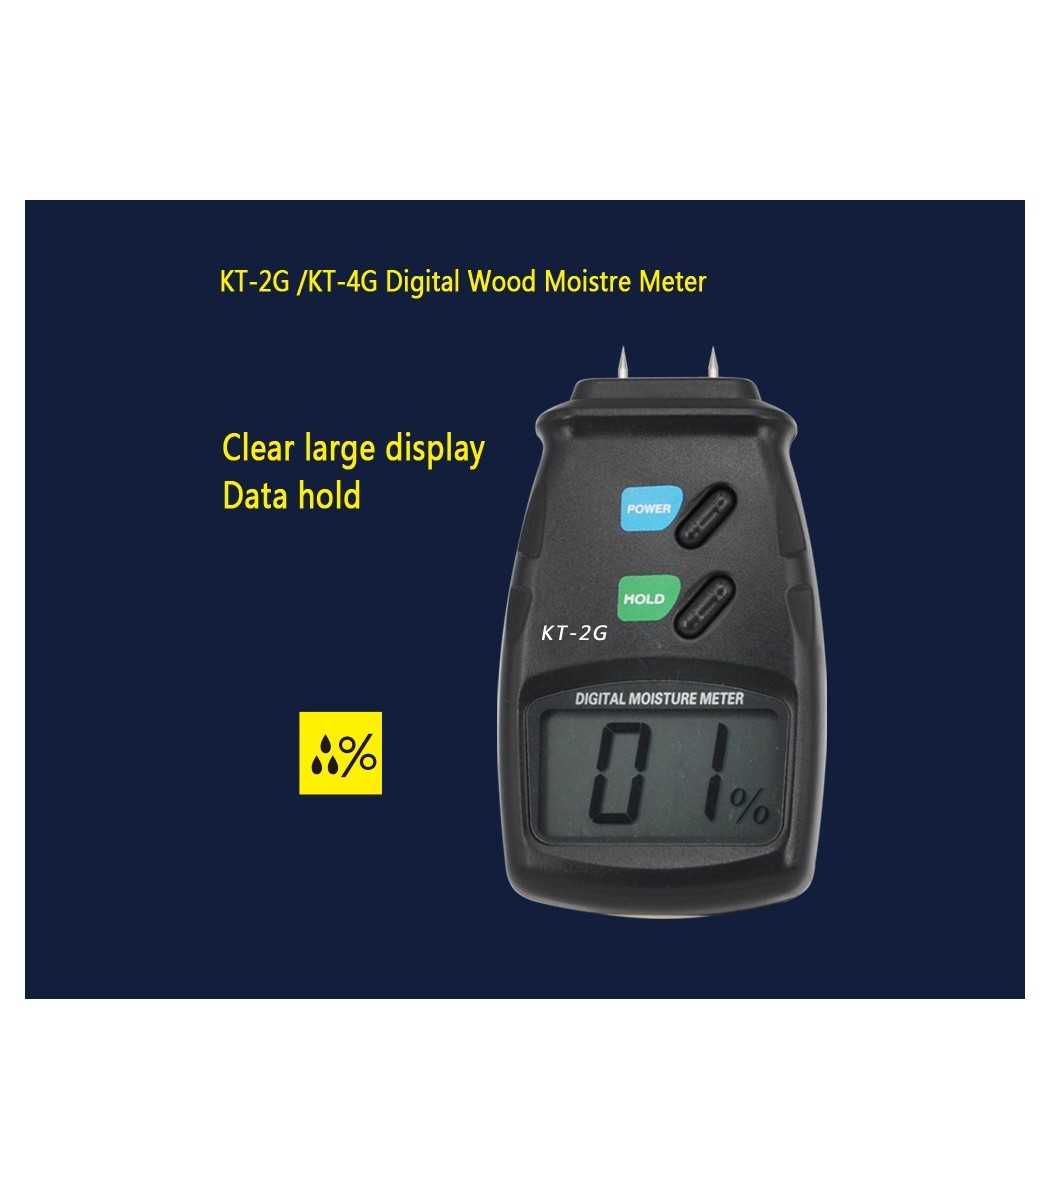 KT-2G /KT-4G Digital Wood Moistre Meter